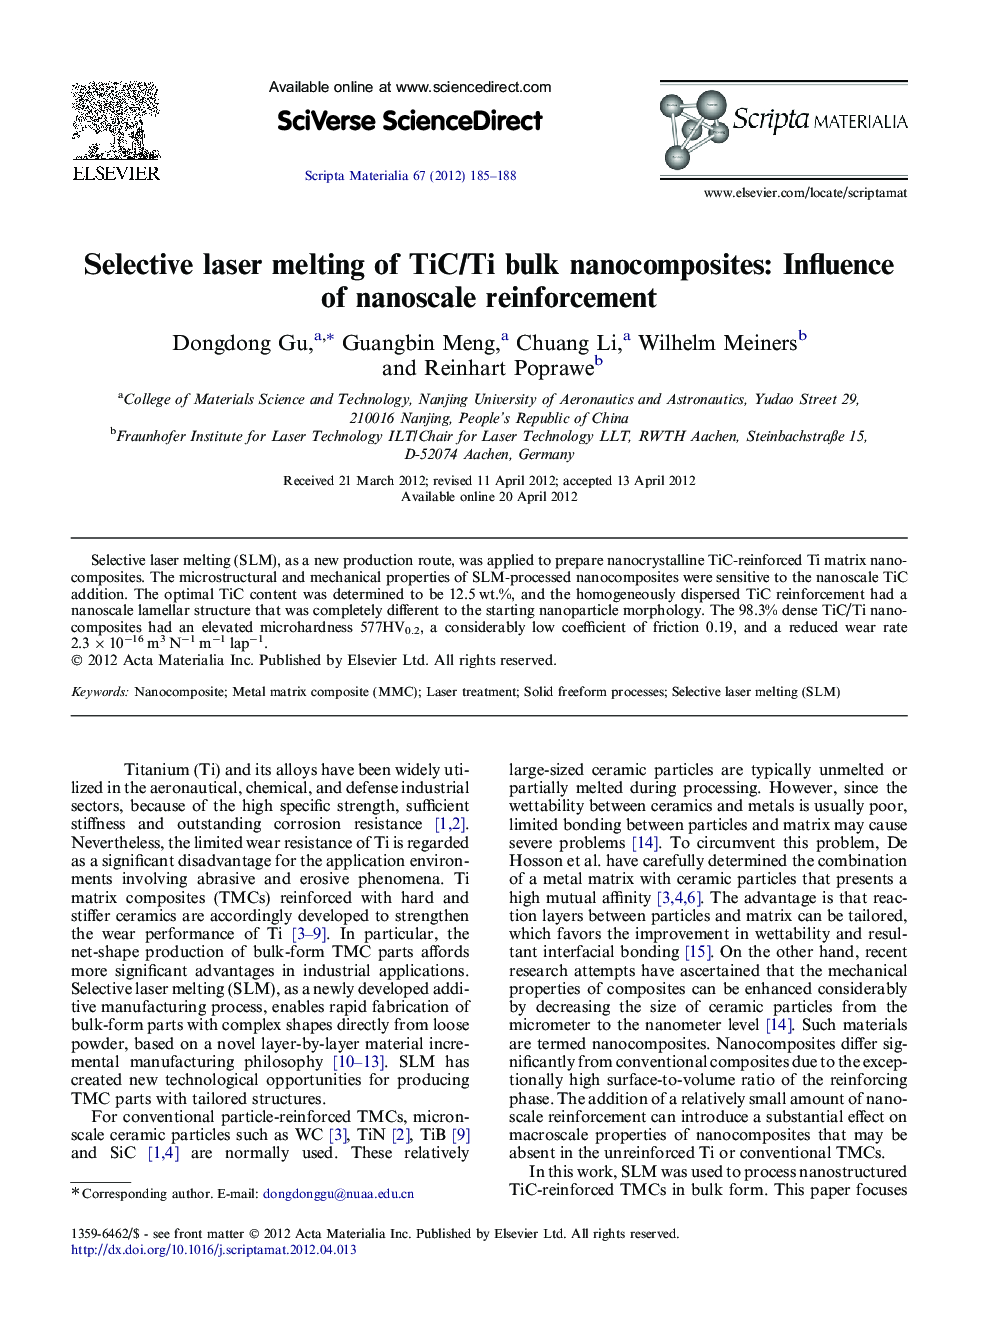 Selective laser melting of TiC/Ti bulk nanocomposites: Influence of nanoscale reinforcement